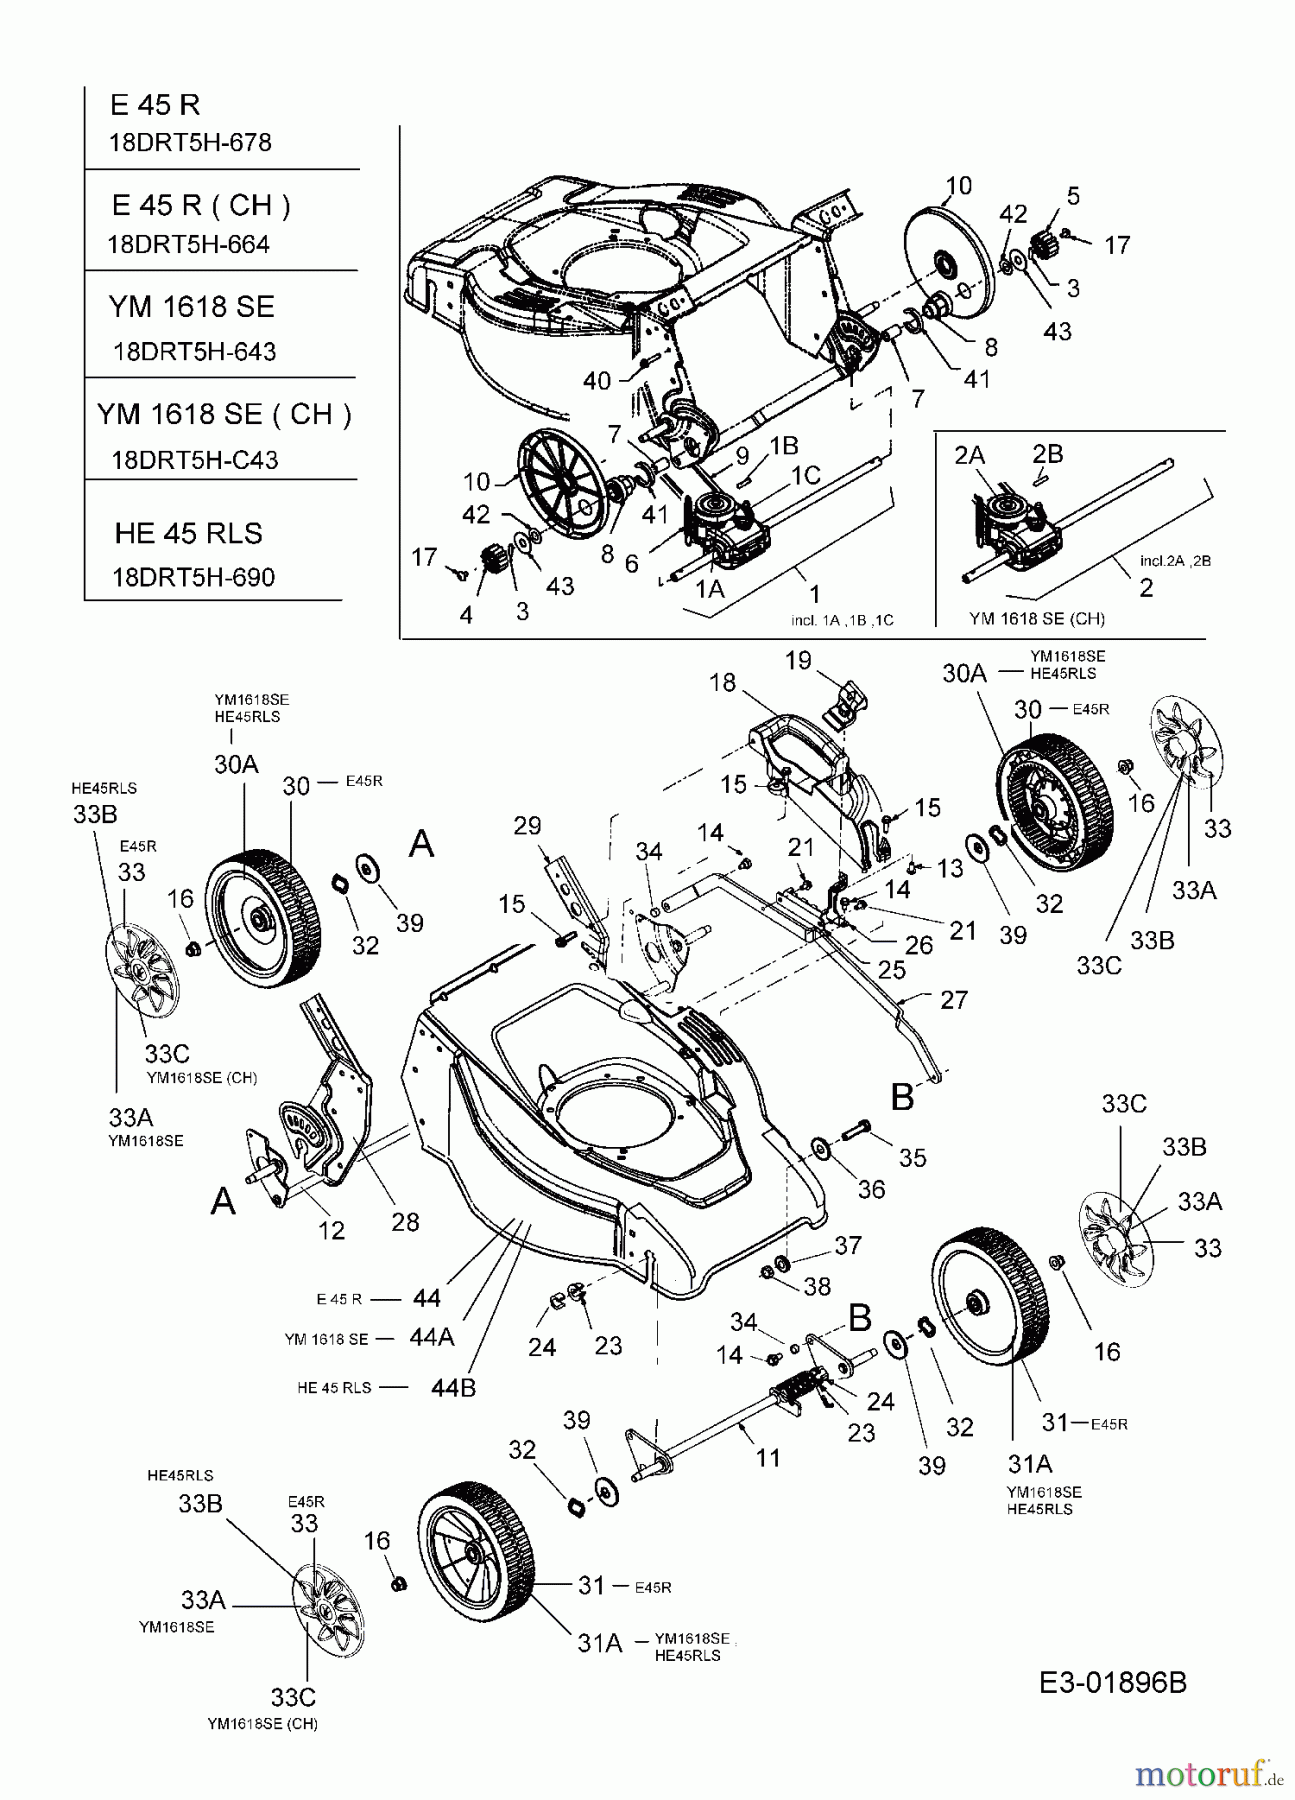  Yard-Man Electric mower self propelled YM 1618 SE 18DRT5H-C43  (2005) Gearbox, Wheels, Cutting hight adjustment